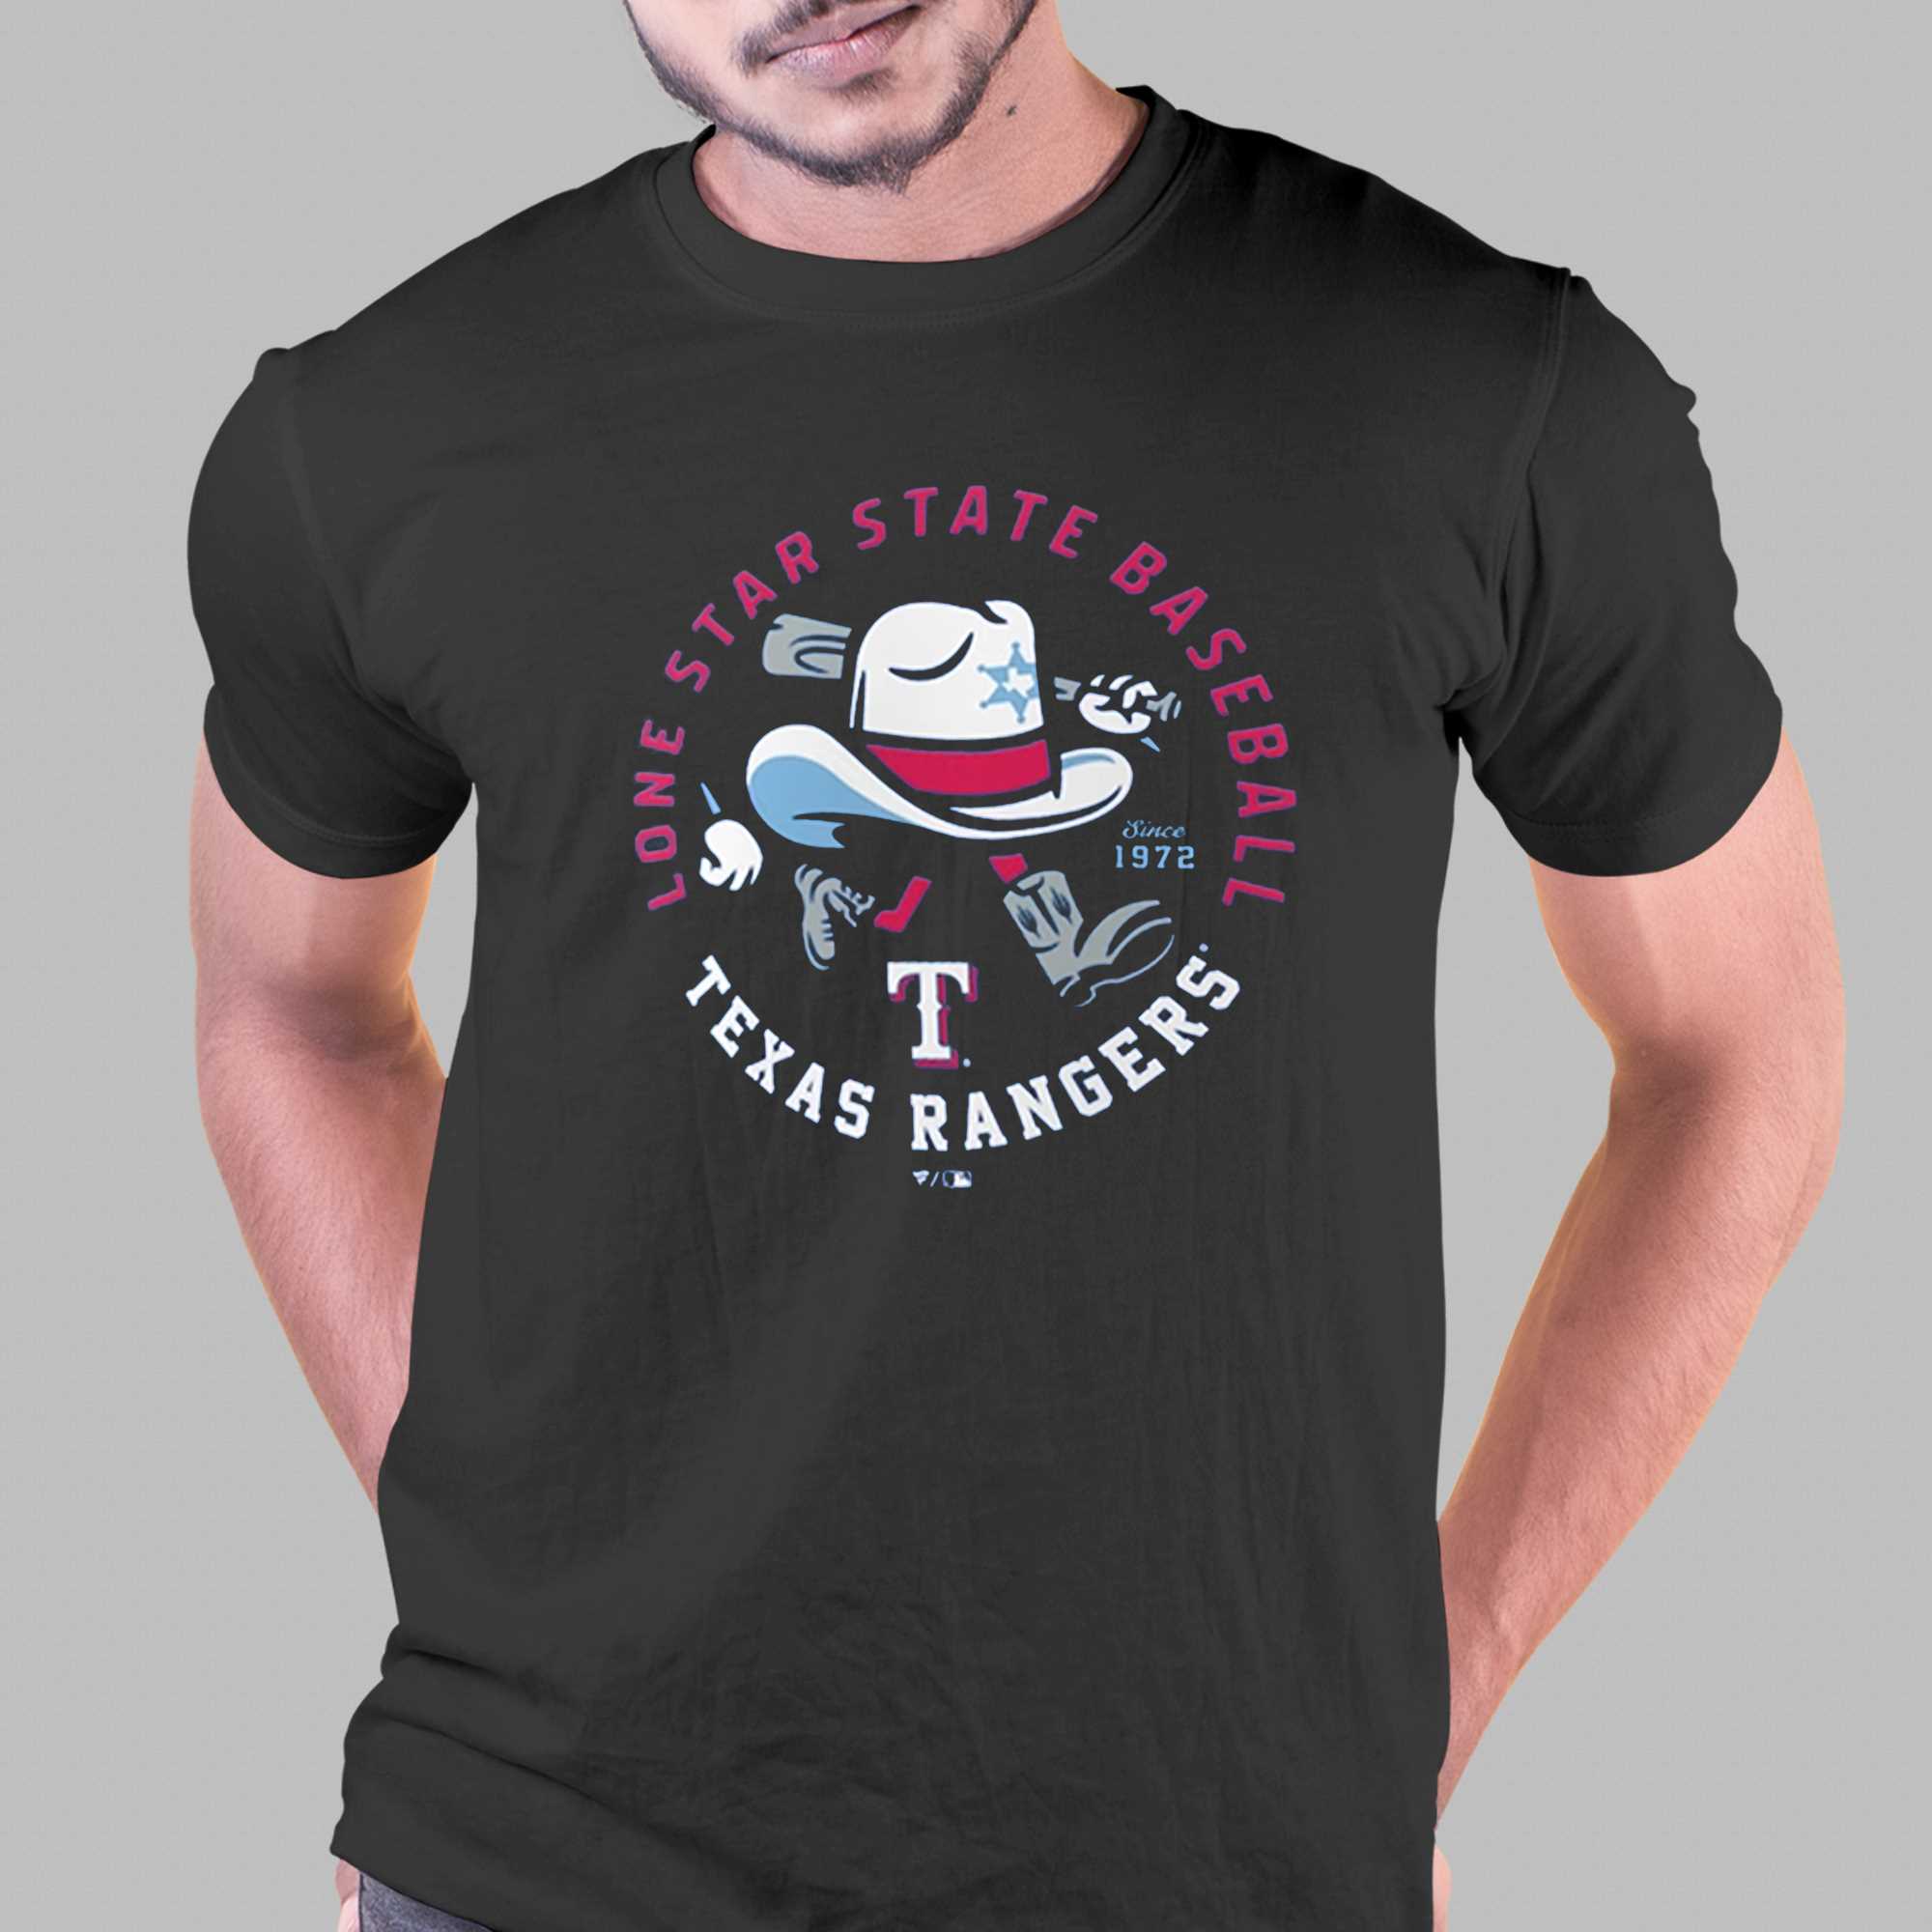 Texas Rangers Fanatics Branded Women's City Pride V-Neck T-Shirt - White